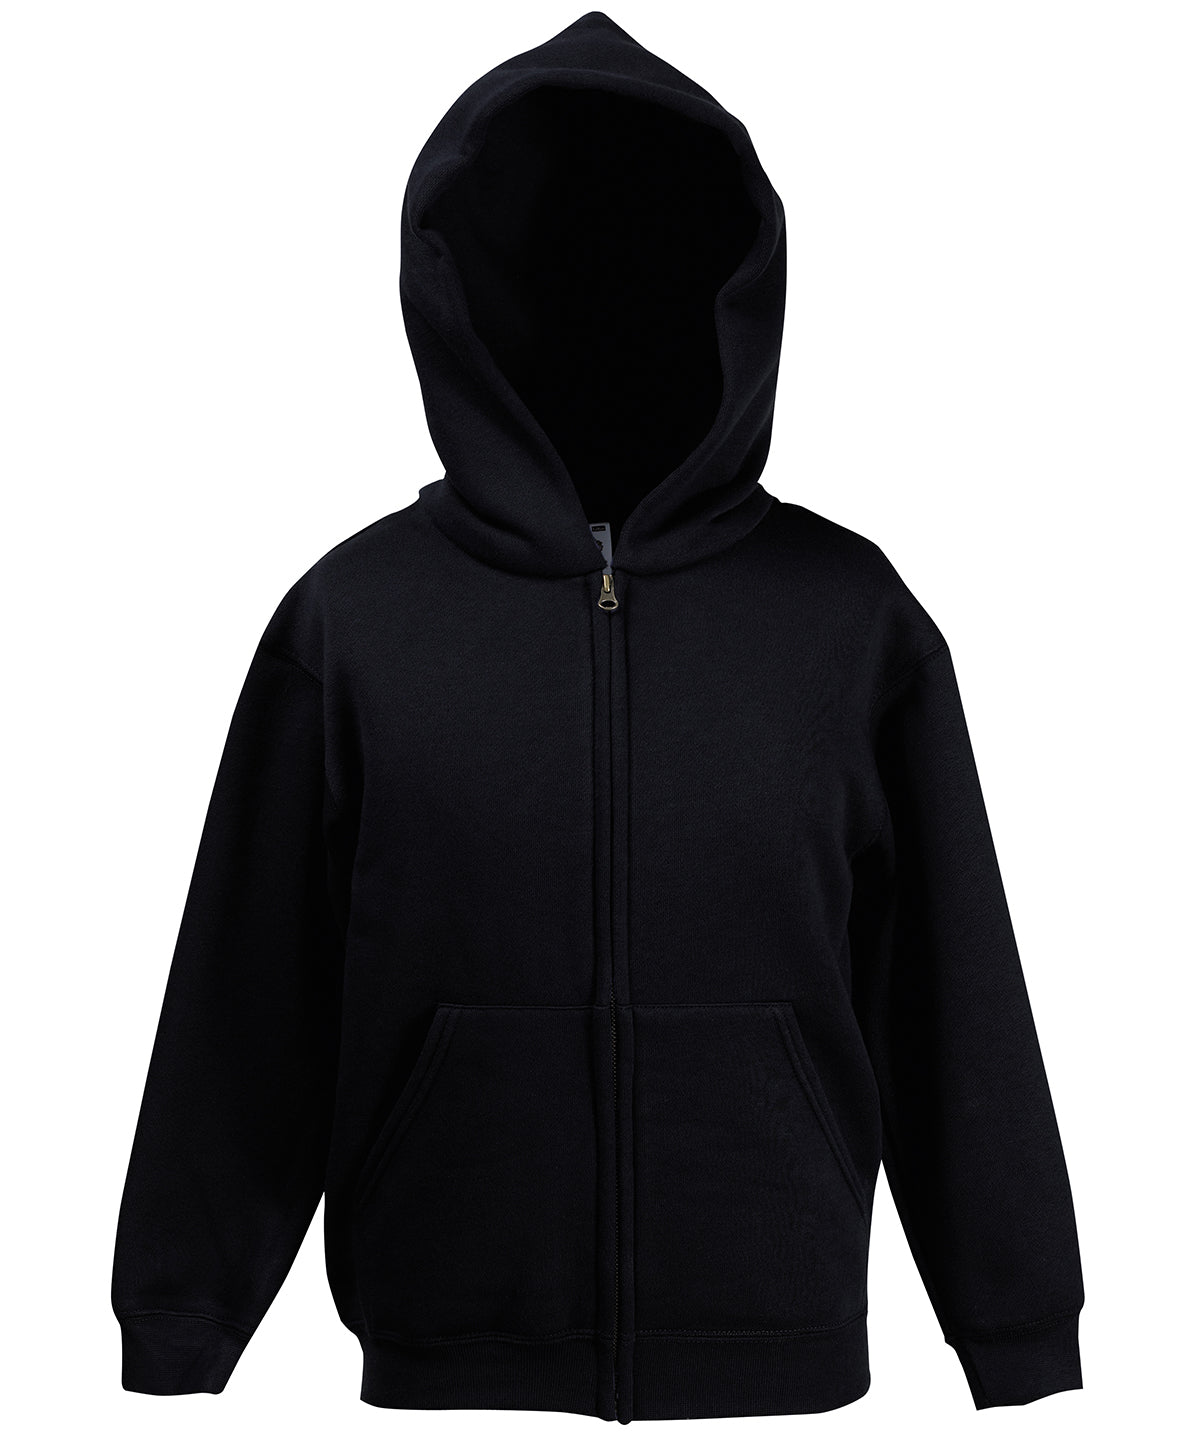 Kids classic hooded sweatshirt jacket | Black